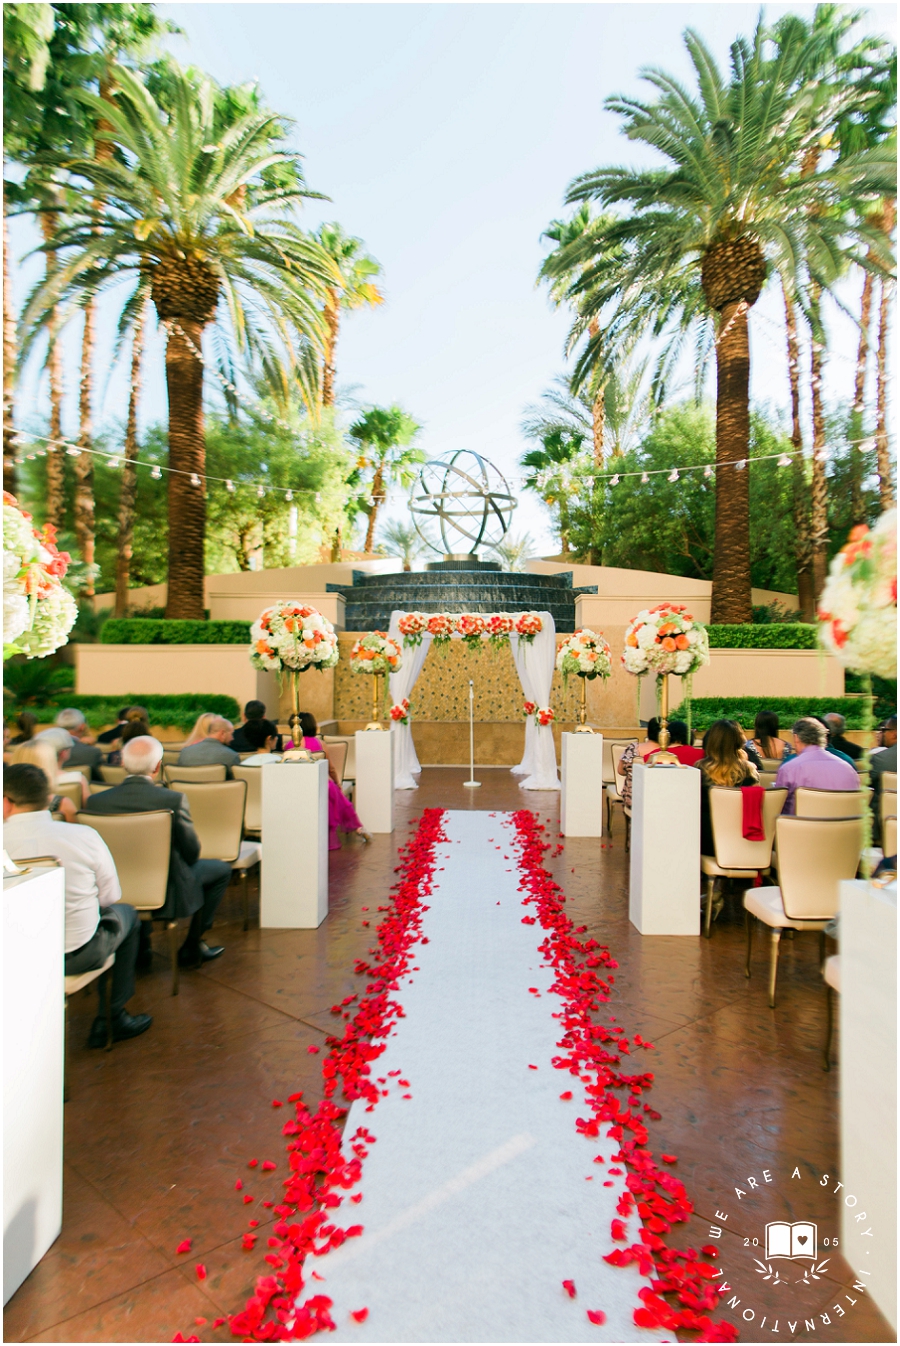 Four Seasons wedding photographer Las Vegas _ We Are A Story wedding photographer_2485.jpg